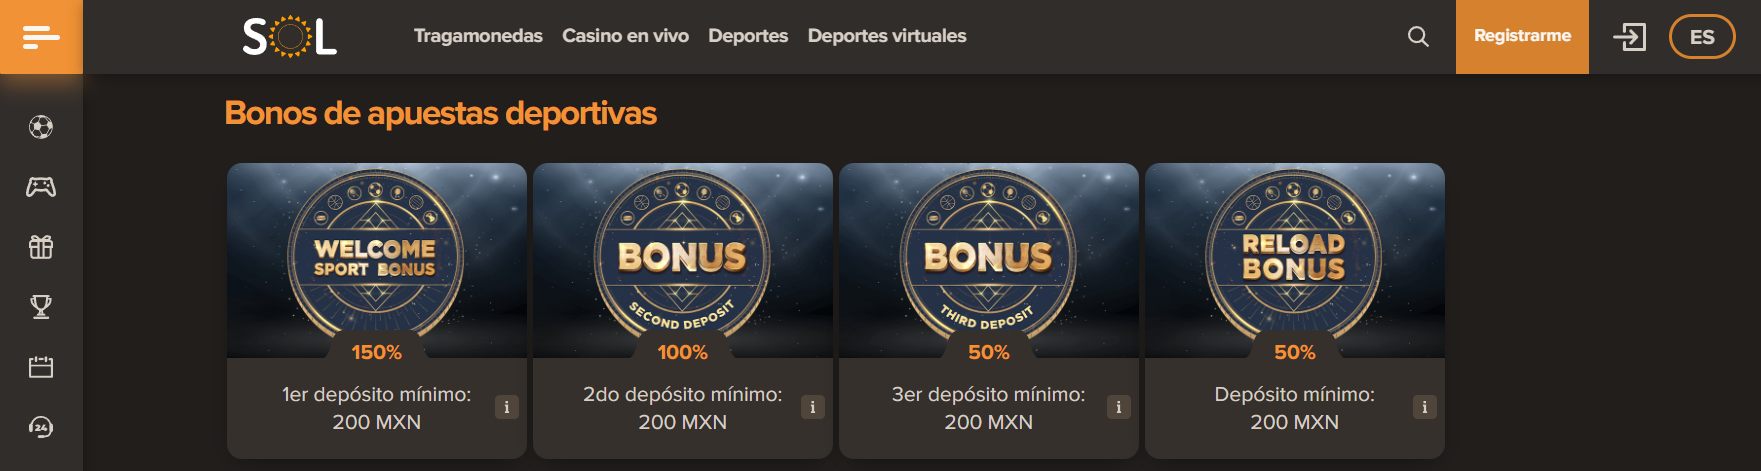 Promociones de Sol Casino MX